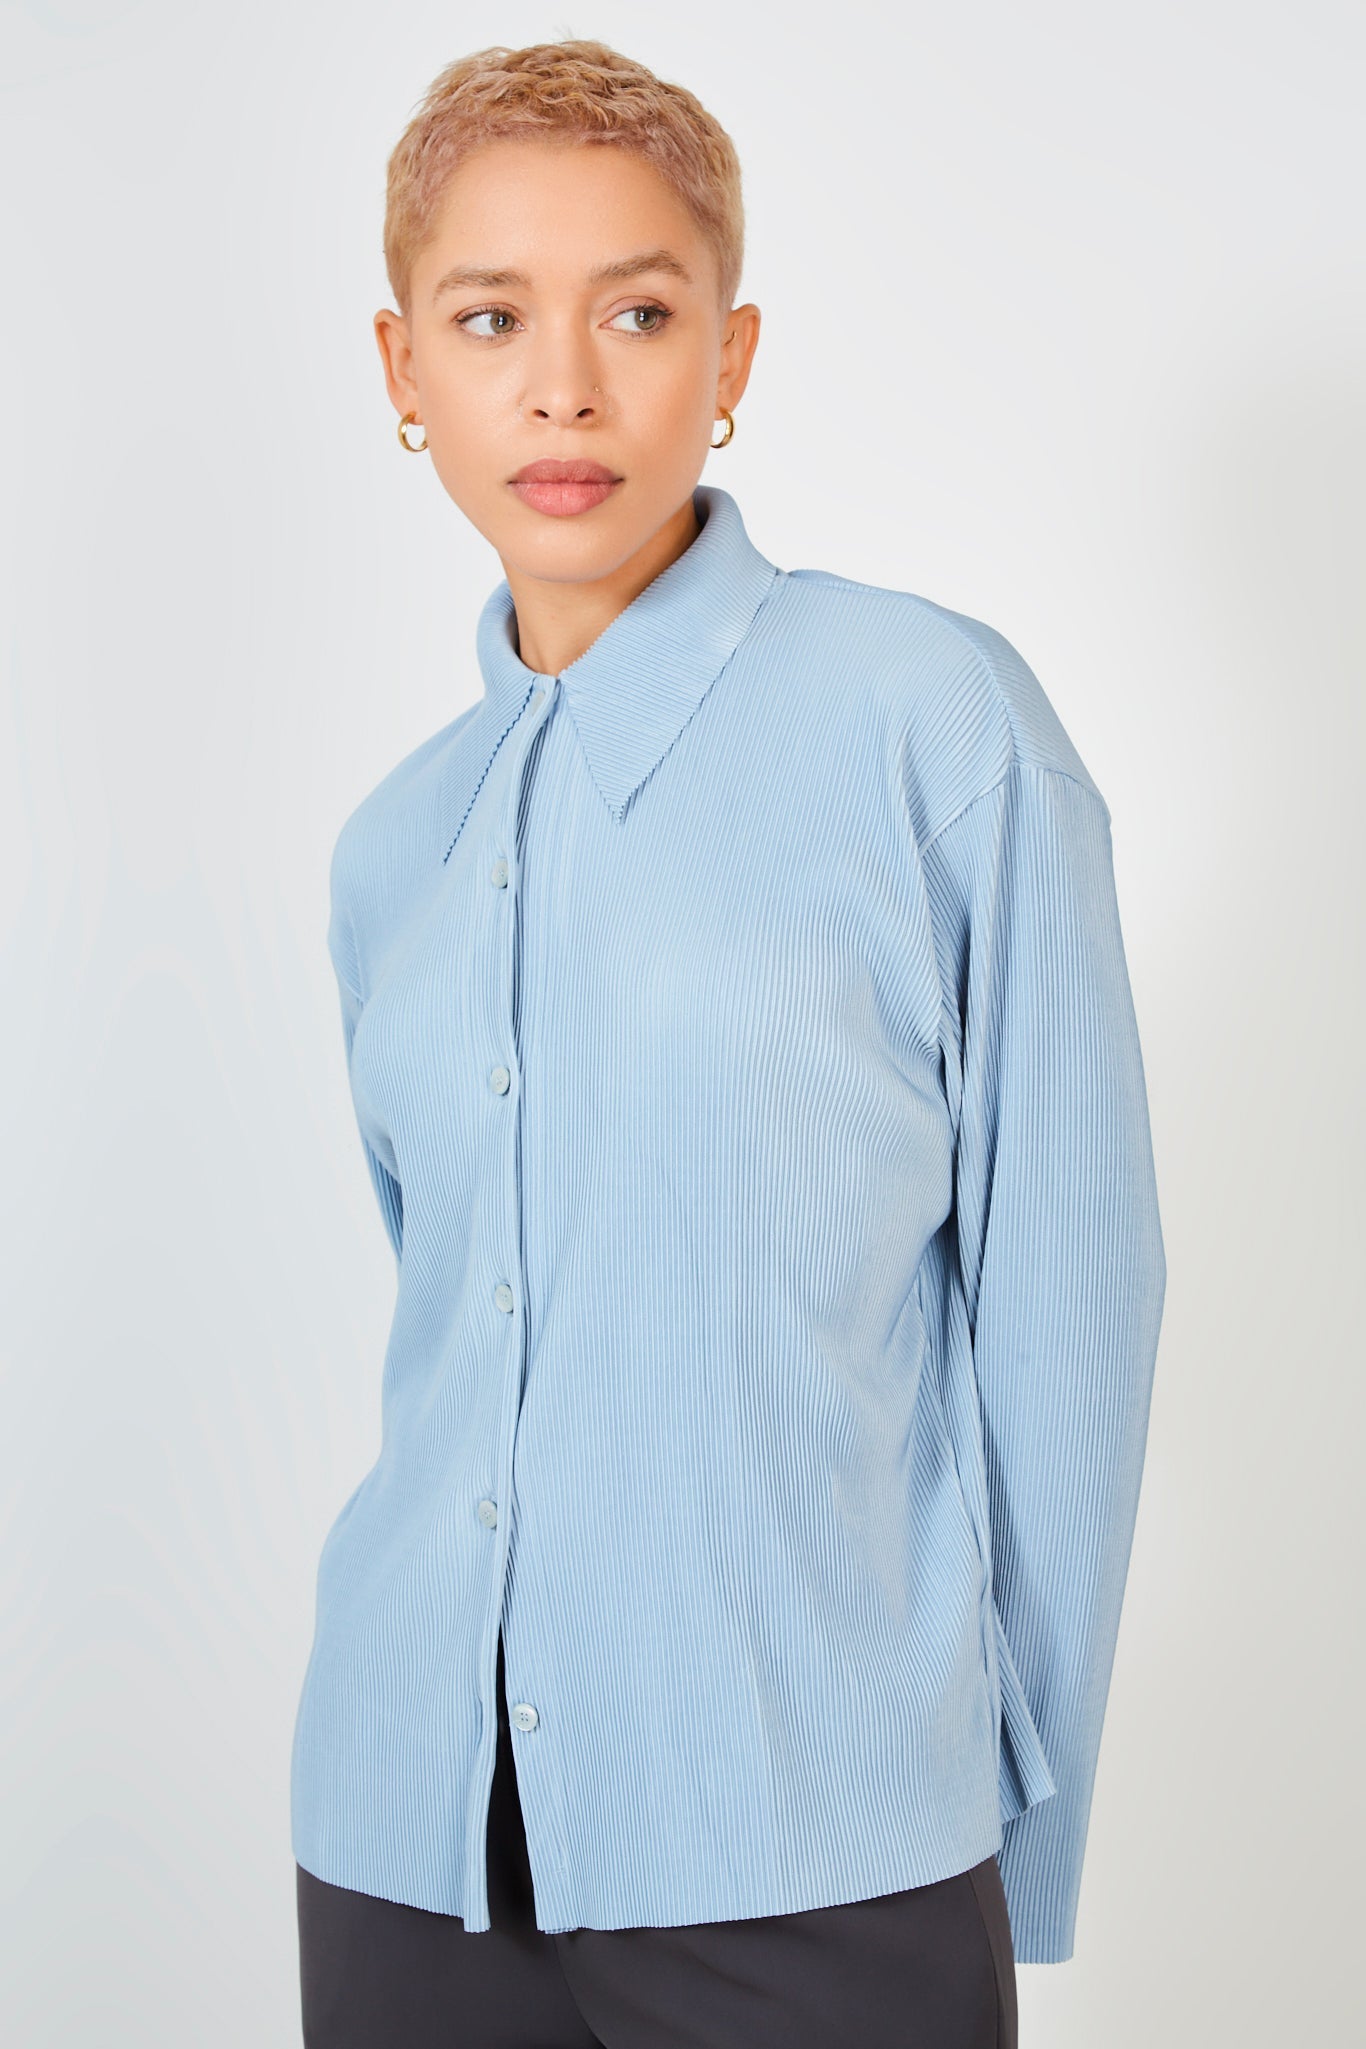 Blue grey micro pleated long sleeved shirt